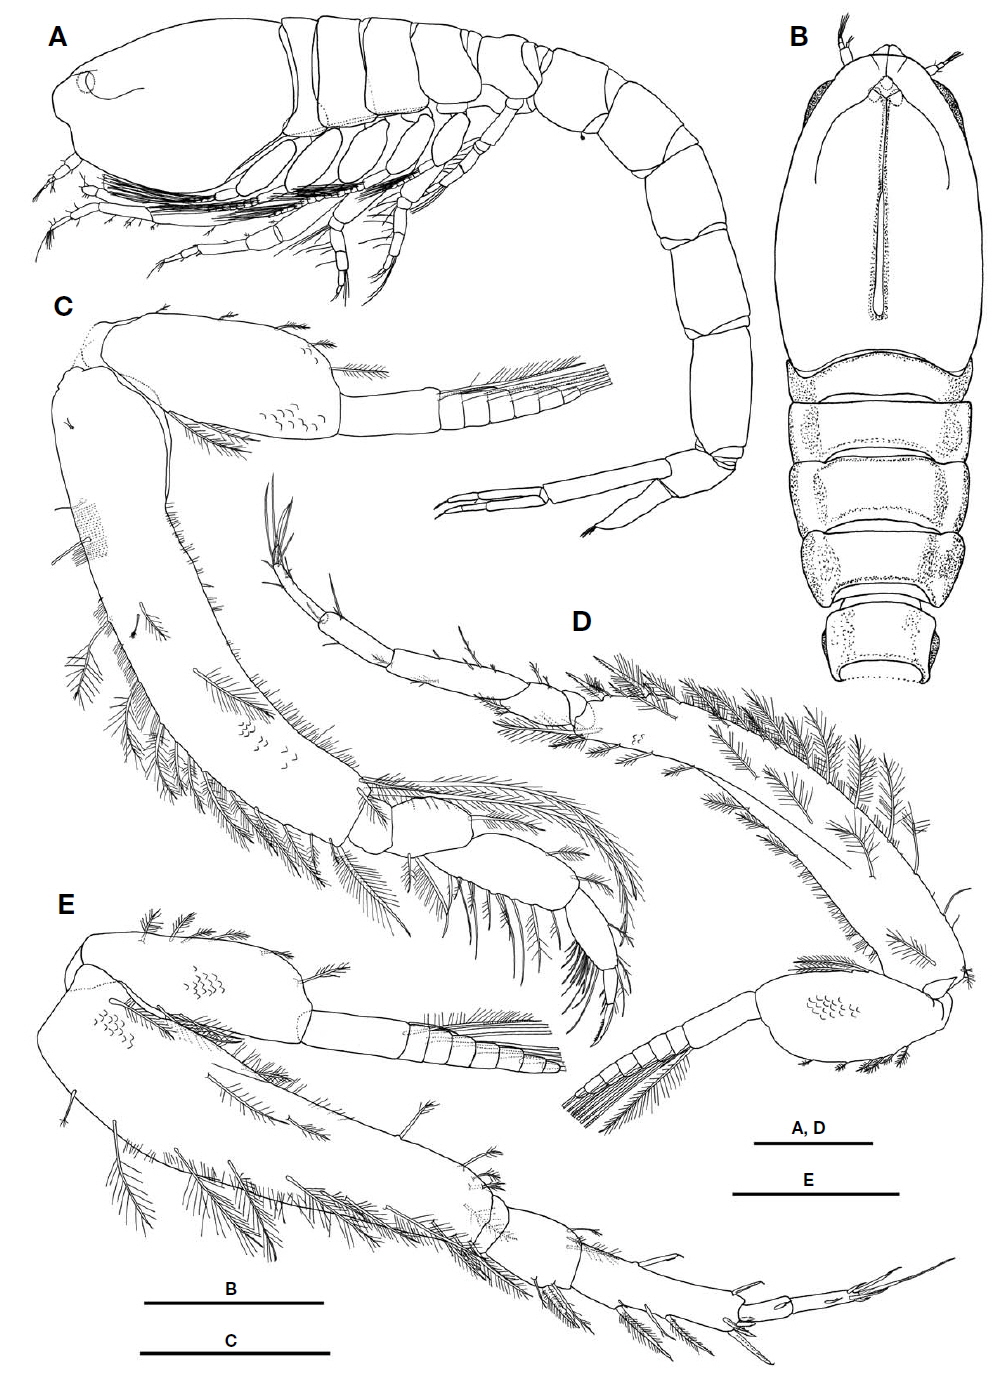 Lamprops carinatus Hart, 1930, male, 7.9 mm. A, Habitus, lateral; B, Cephalothorax, dorsal; C, Maxilliped 3; D, Pereopod 1; E, Pereopod 2. Scale bars: A, B=1.0 mm, C-E=0.4 mm.